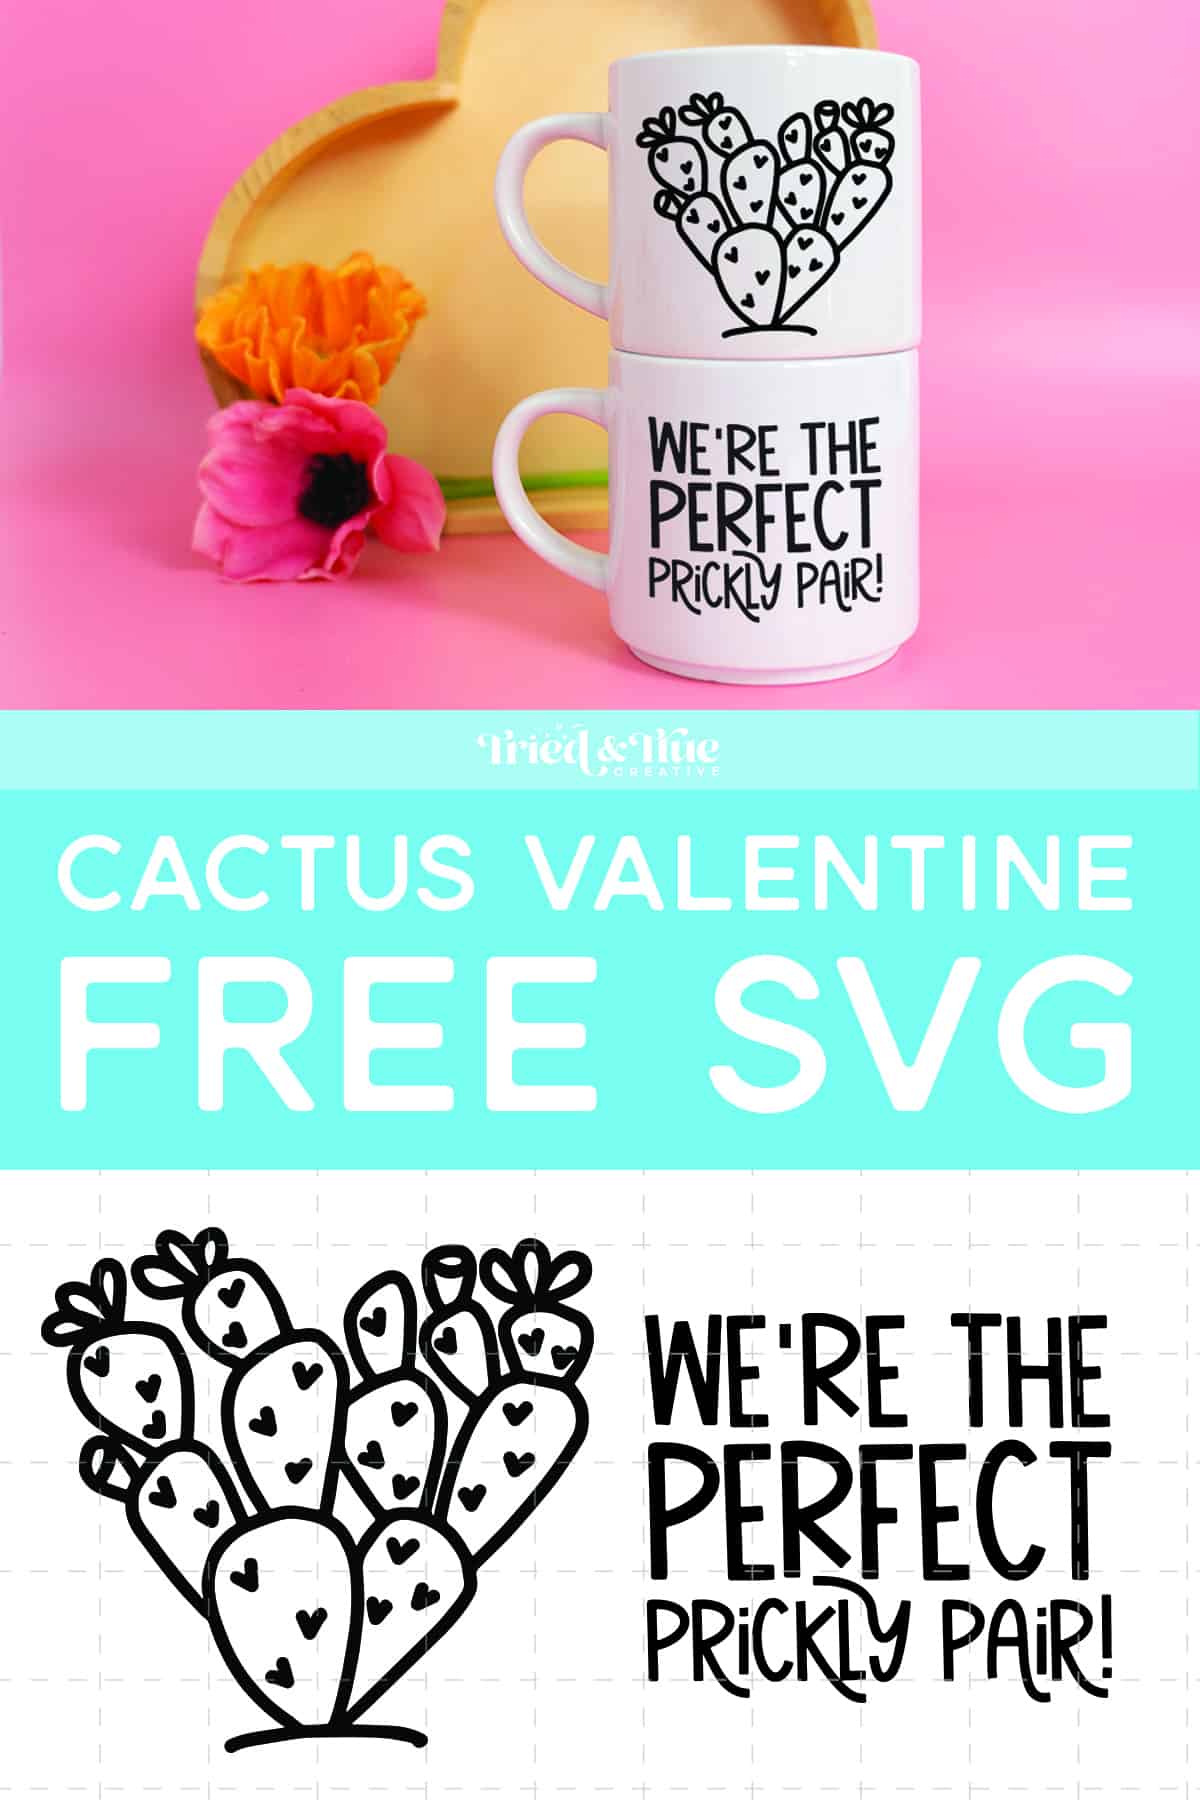 Mug mock up of the Cactus Valentine Free SVG file